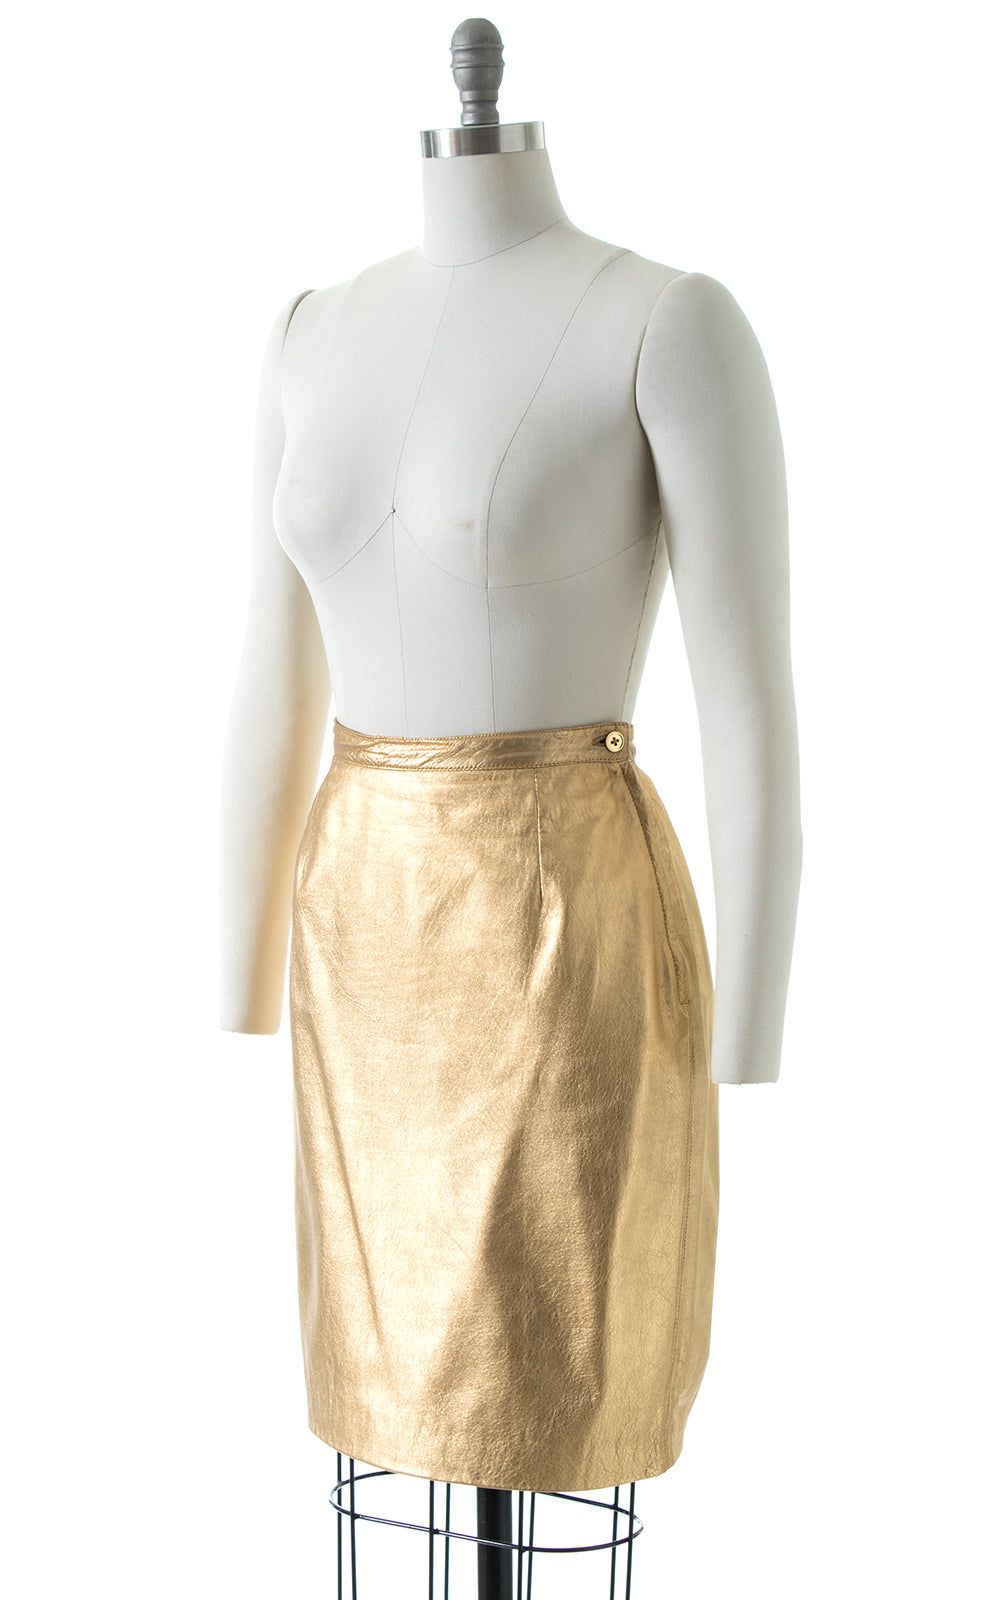 1980s Metallic Gold Leather Mini Skirt